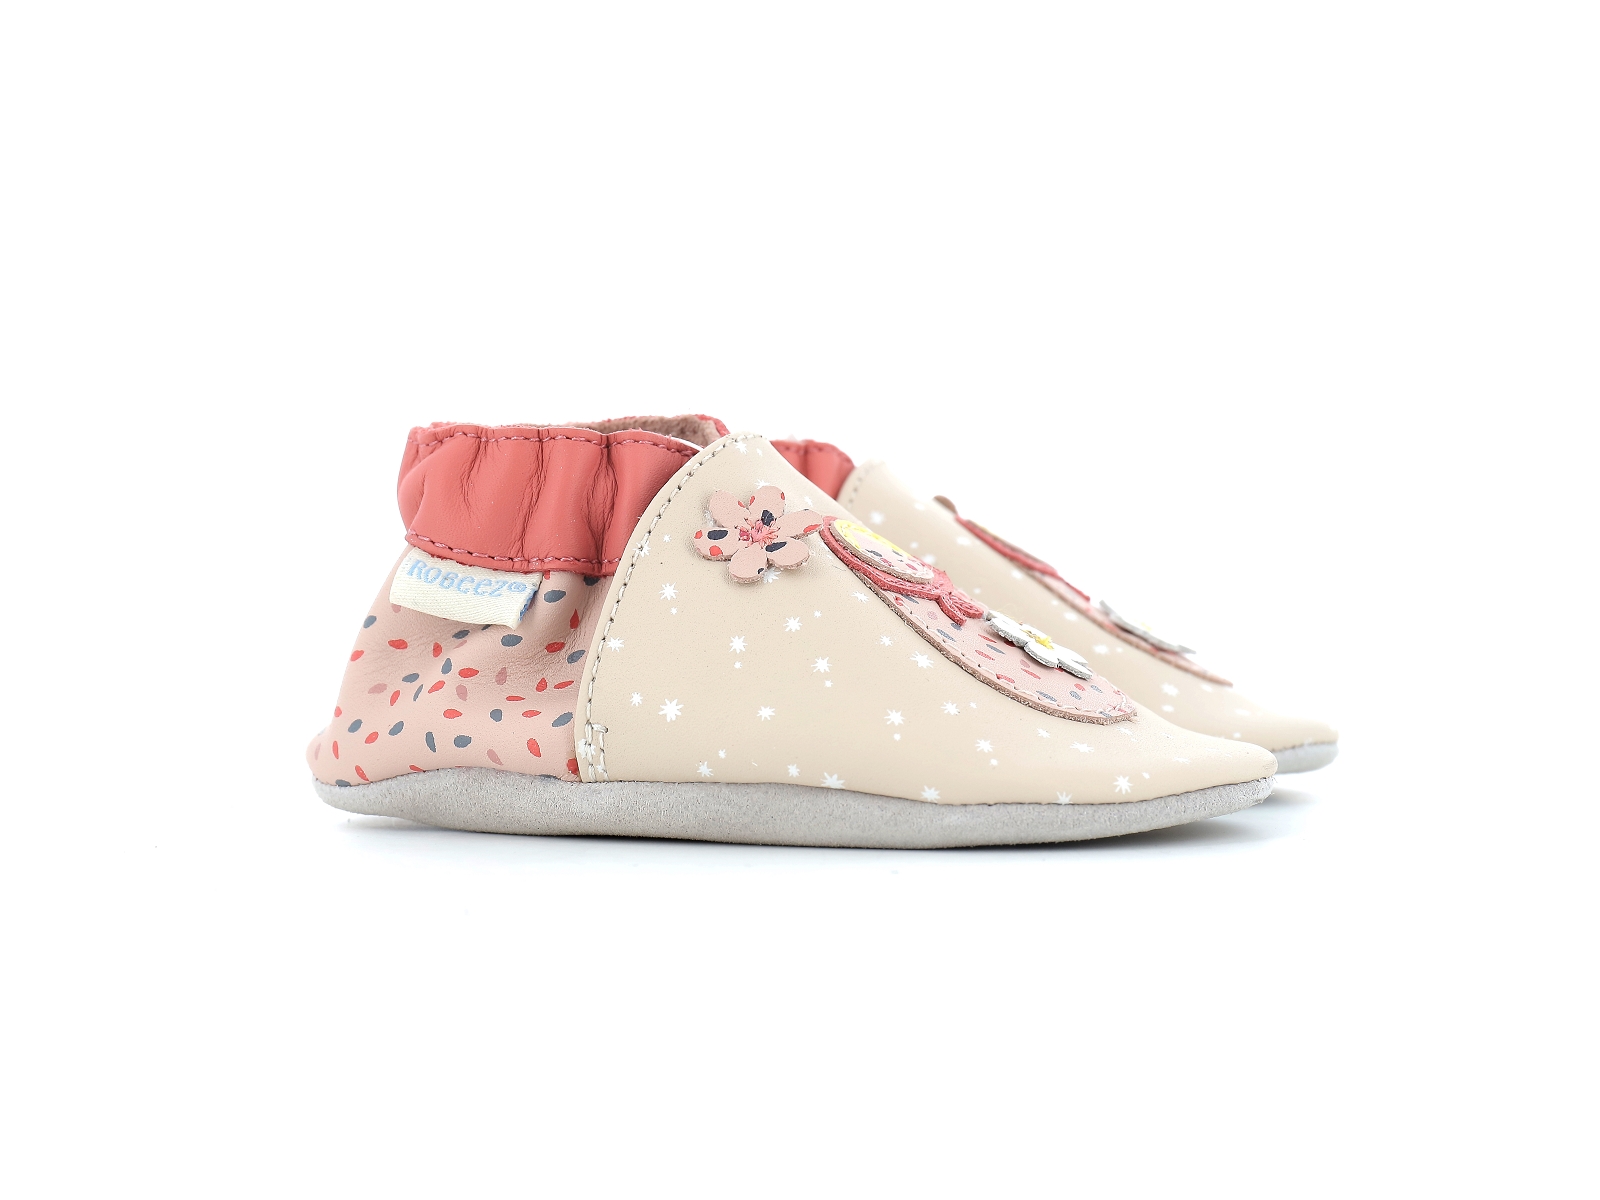 Chaussures du Château  Robeez chaussons flowerdols 19 25 beige rose bebe  fille